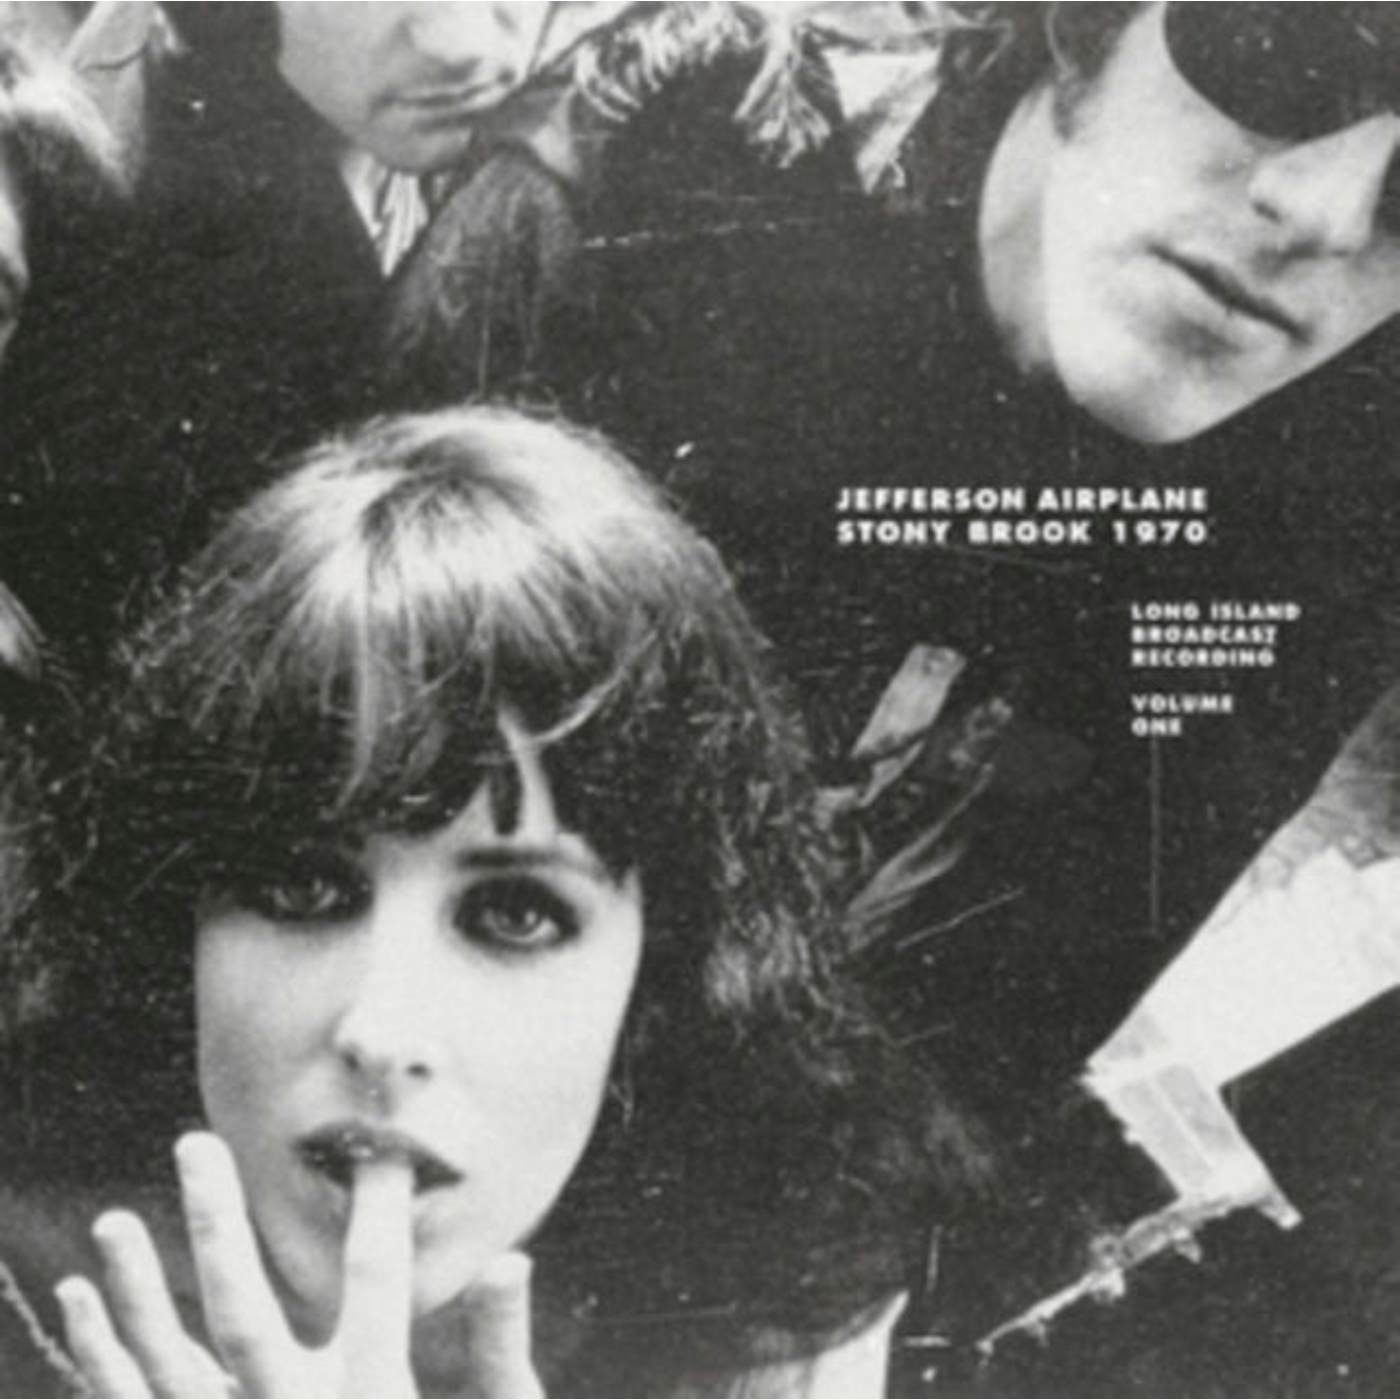 Jefferson Airplane LP - Stony Brook 1970 Vol.1 (Vinyl)